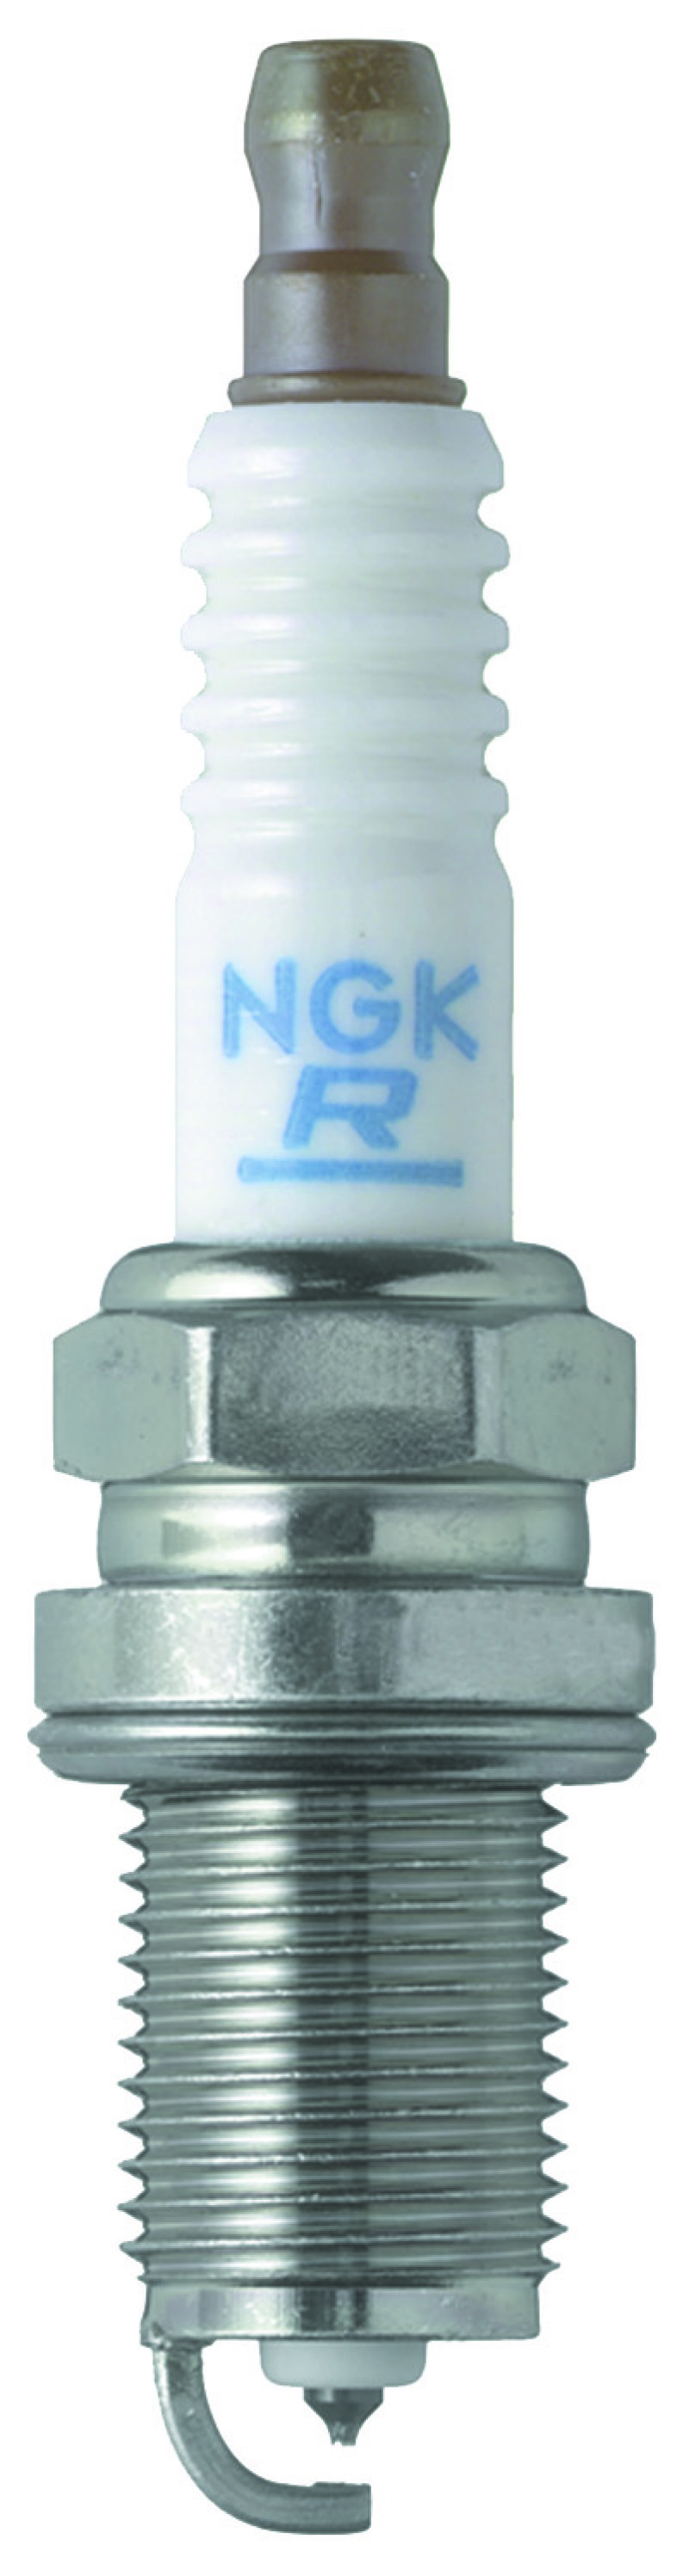 NGK Laser Platinum Spark Plug Box of 4 (PFR6N-11) - 3546